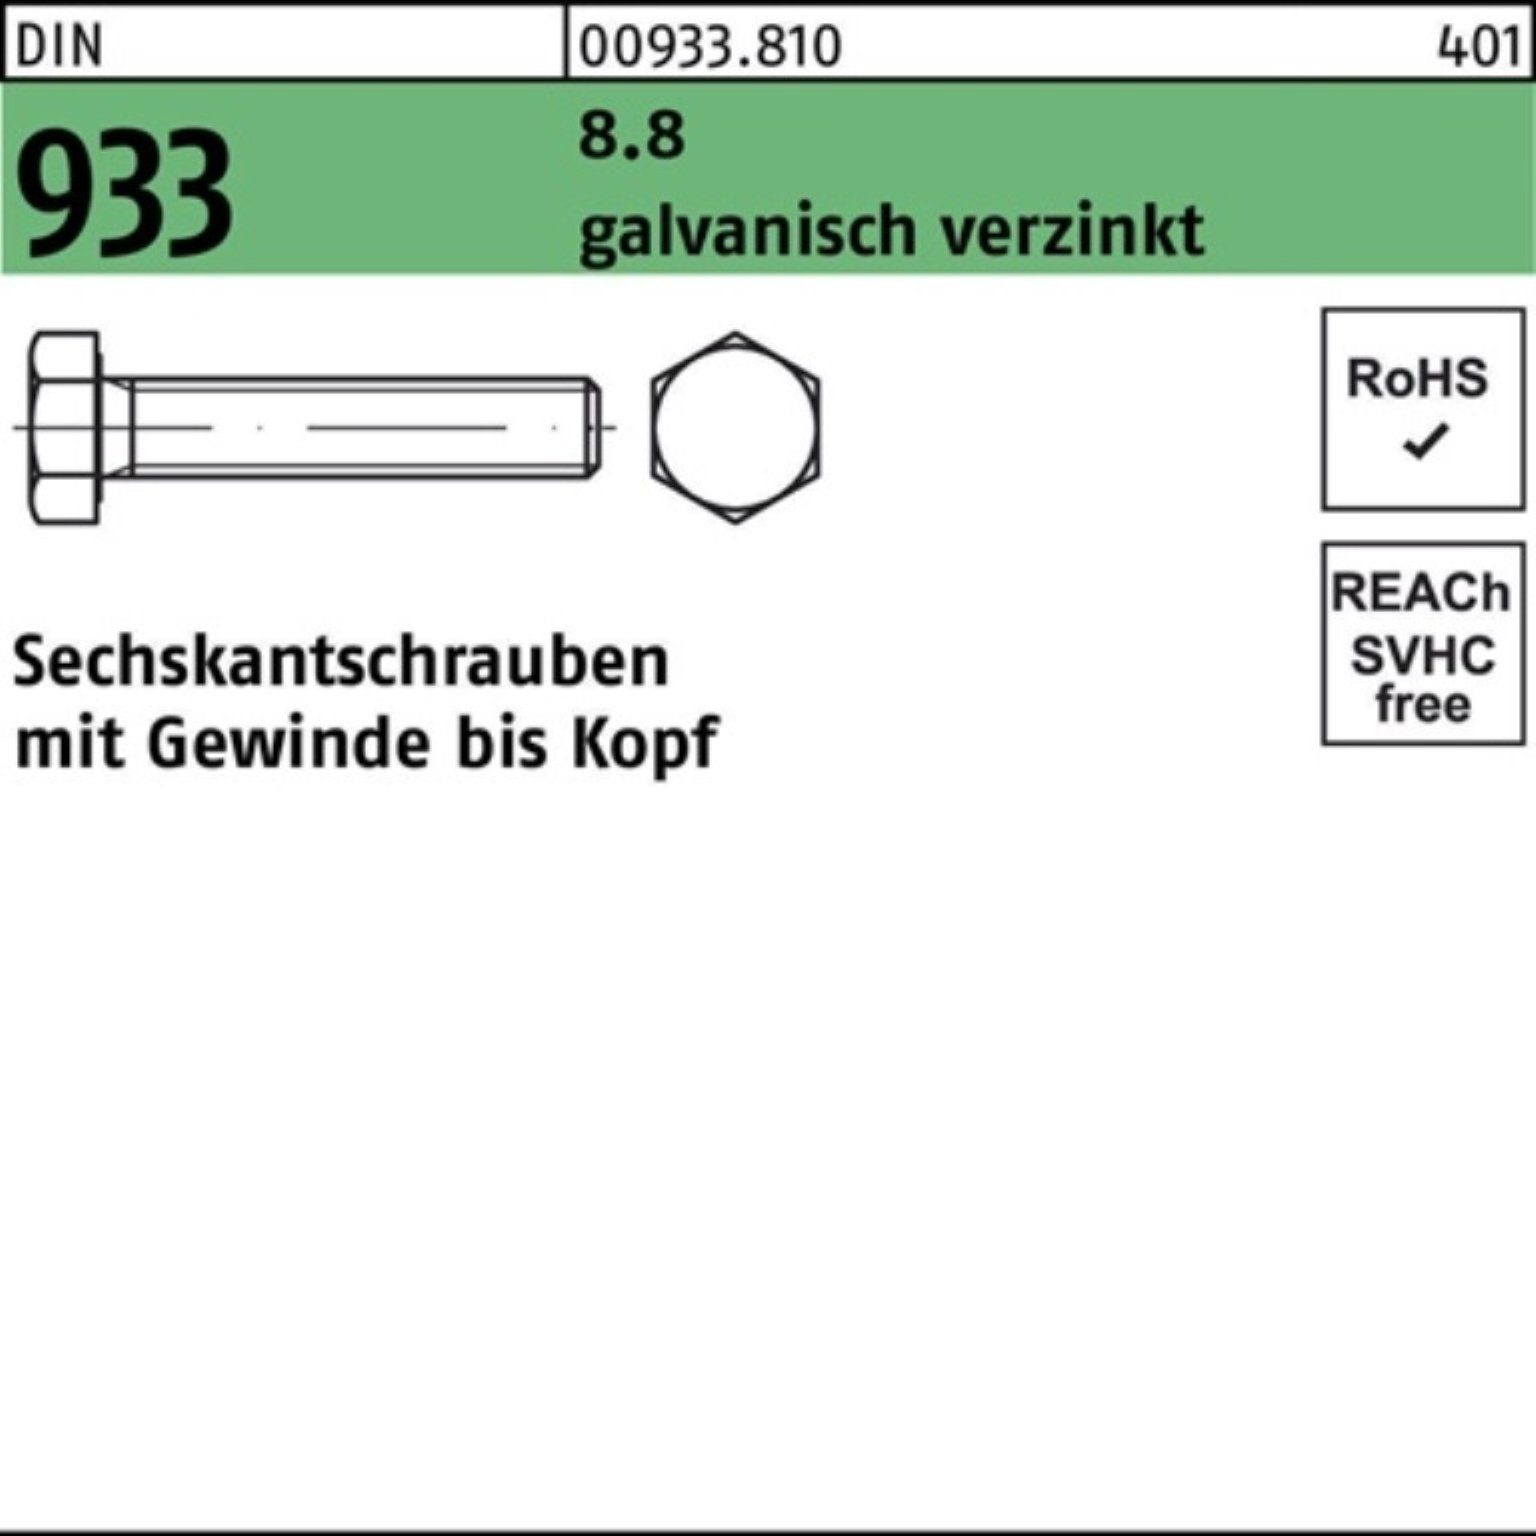 VG 95 M12x galv.verz. 933 Reyher 100er Sechskantschraube DIN Pack 50 Sechskantschraube Stü 8.8